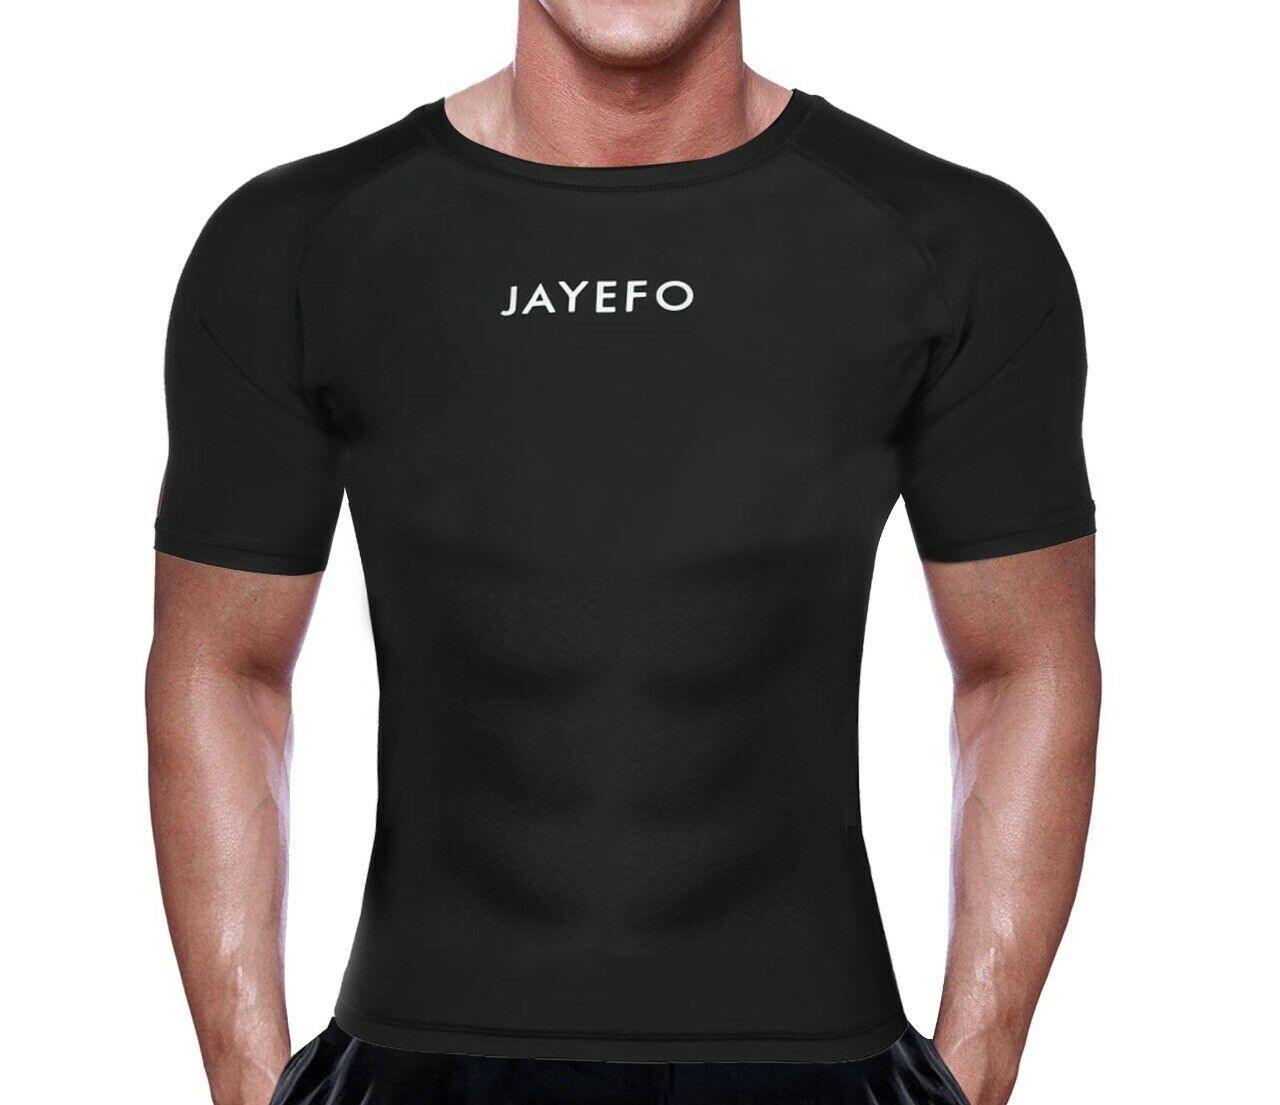 Rash Guard Mens Short Sleeve Shirt MMA BJJ Surfing Kayaking Gym Athletic Men UPF - Moto Life Products